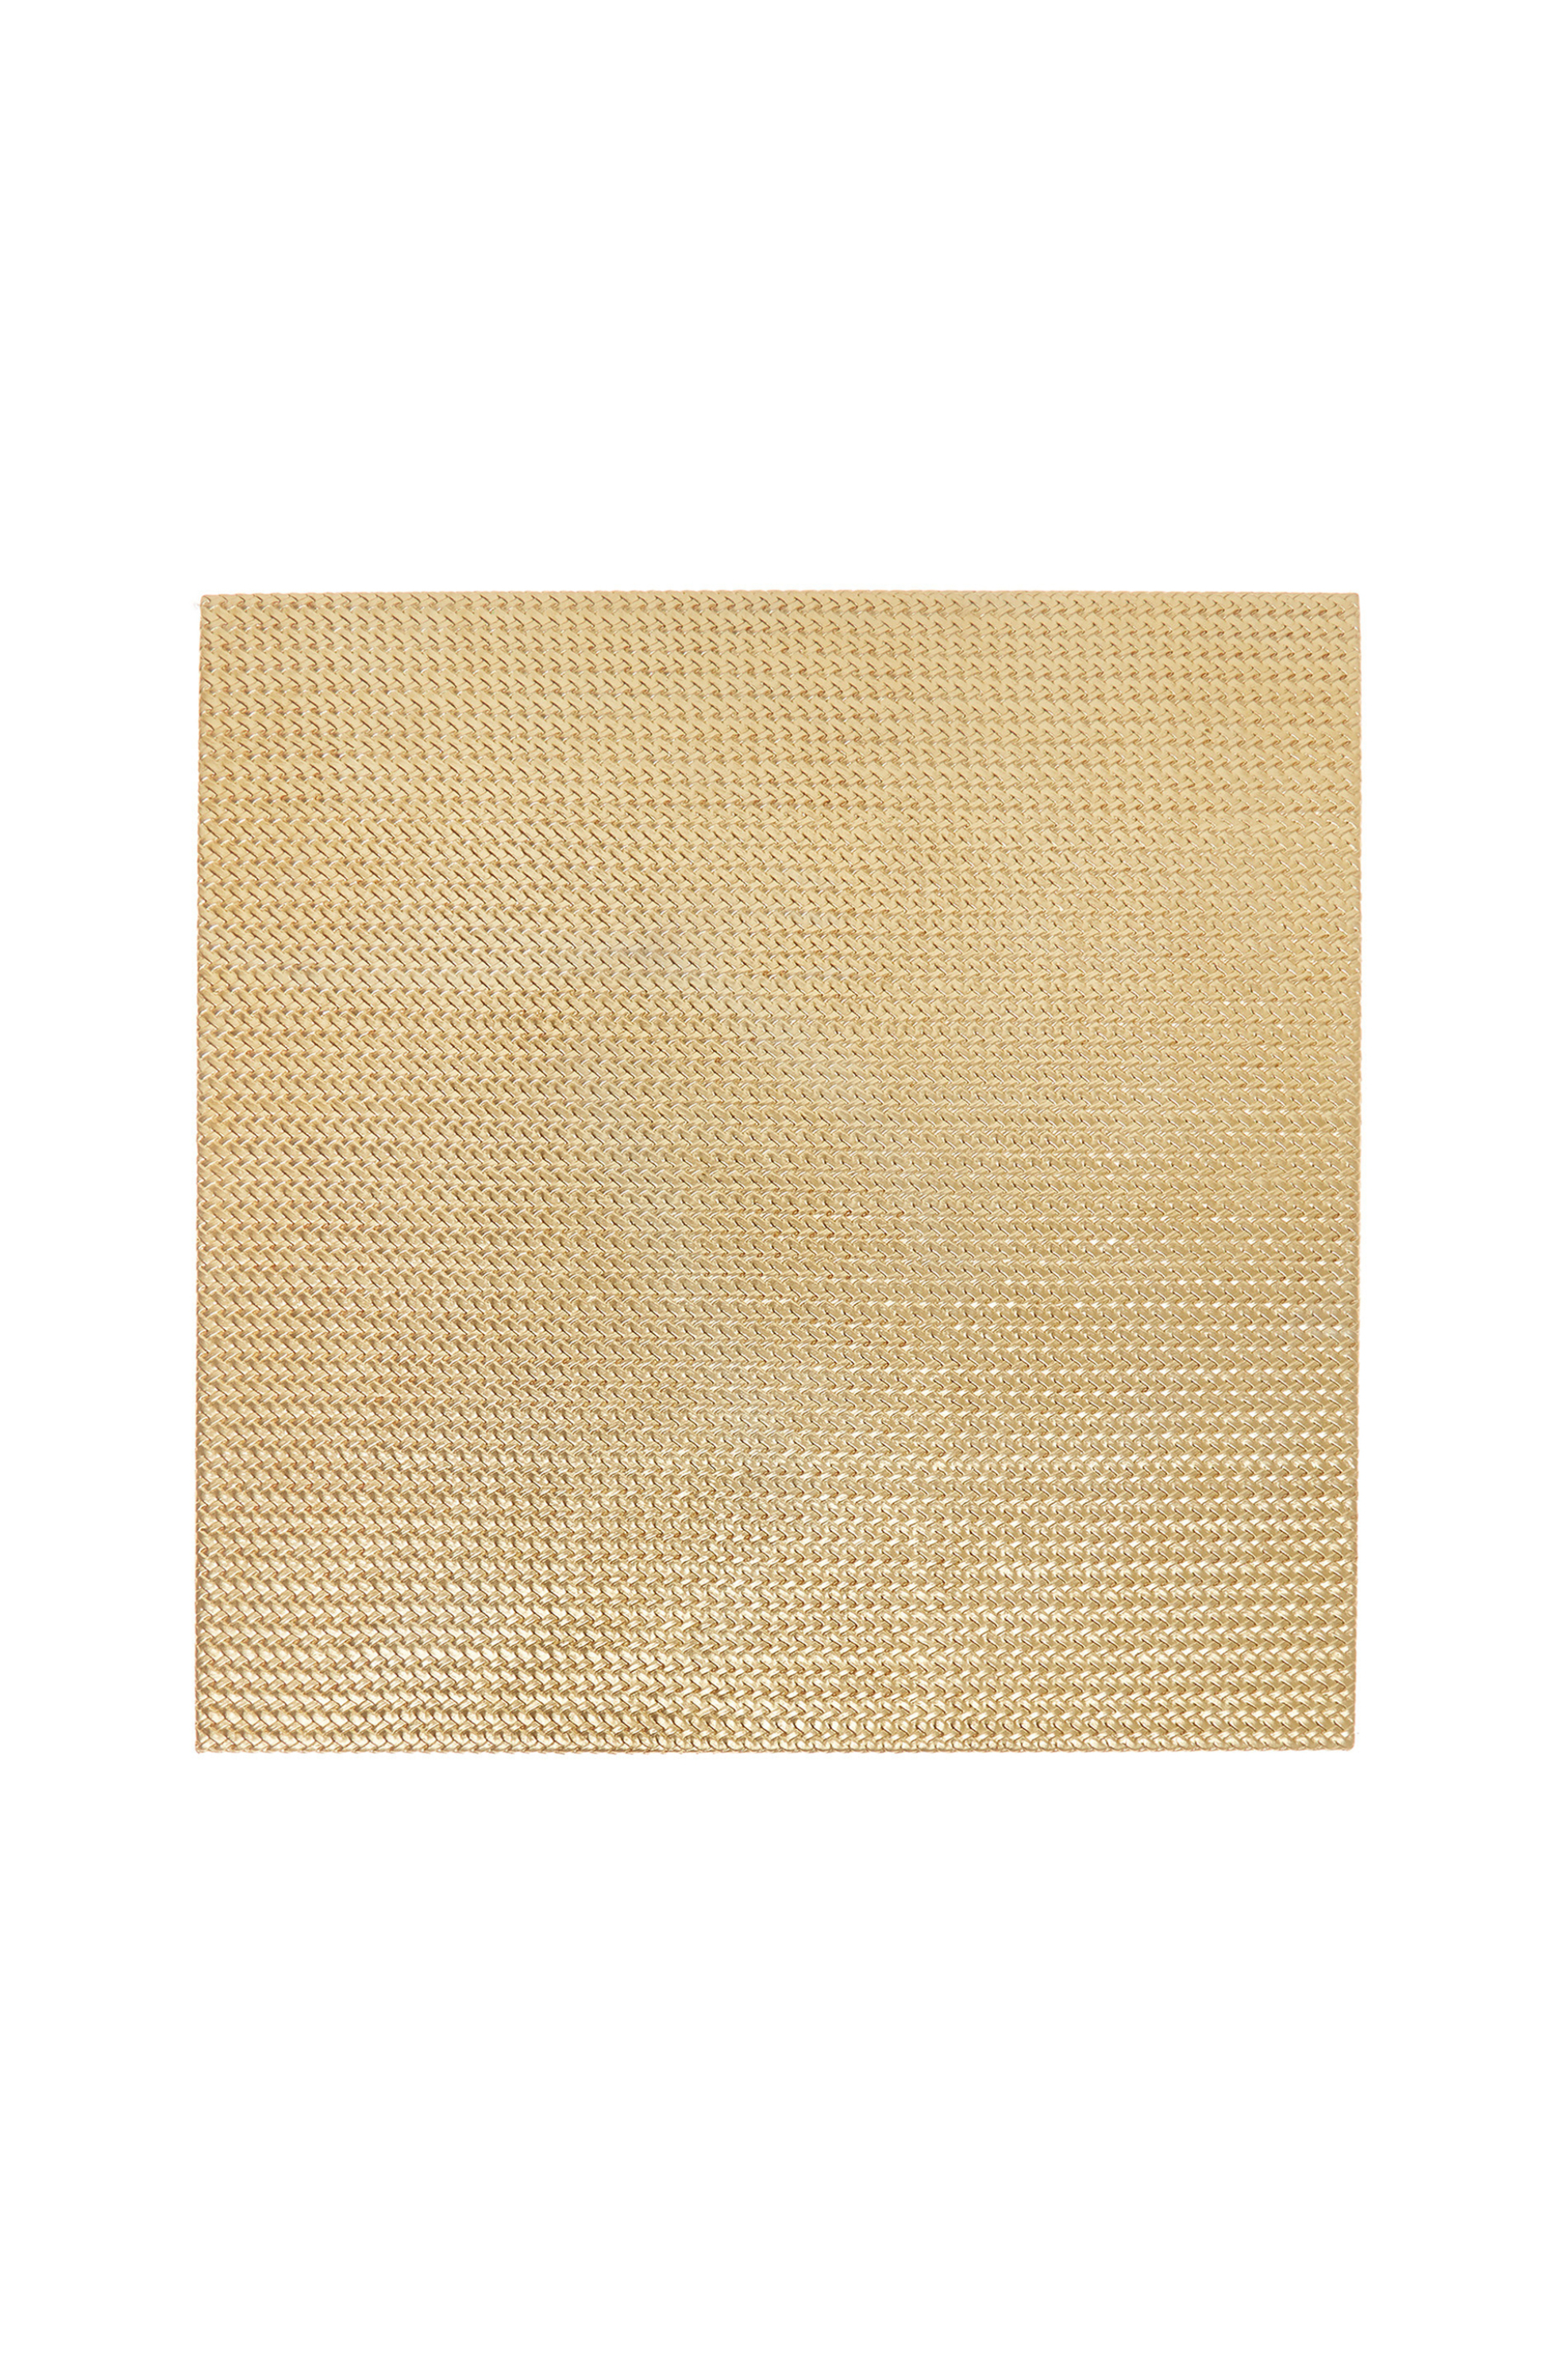 Home > ΚΟΥΖΙΝΑ > Είδη Σερβιρίσματος Coincasa πιατέλα σερβιρίσματος σε τετράγωνο σχήμα με ανάγλυφη υφή 33 x 33 cm - 007127808 Χρυσό